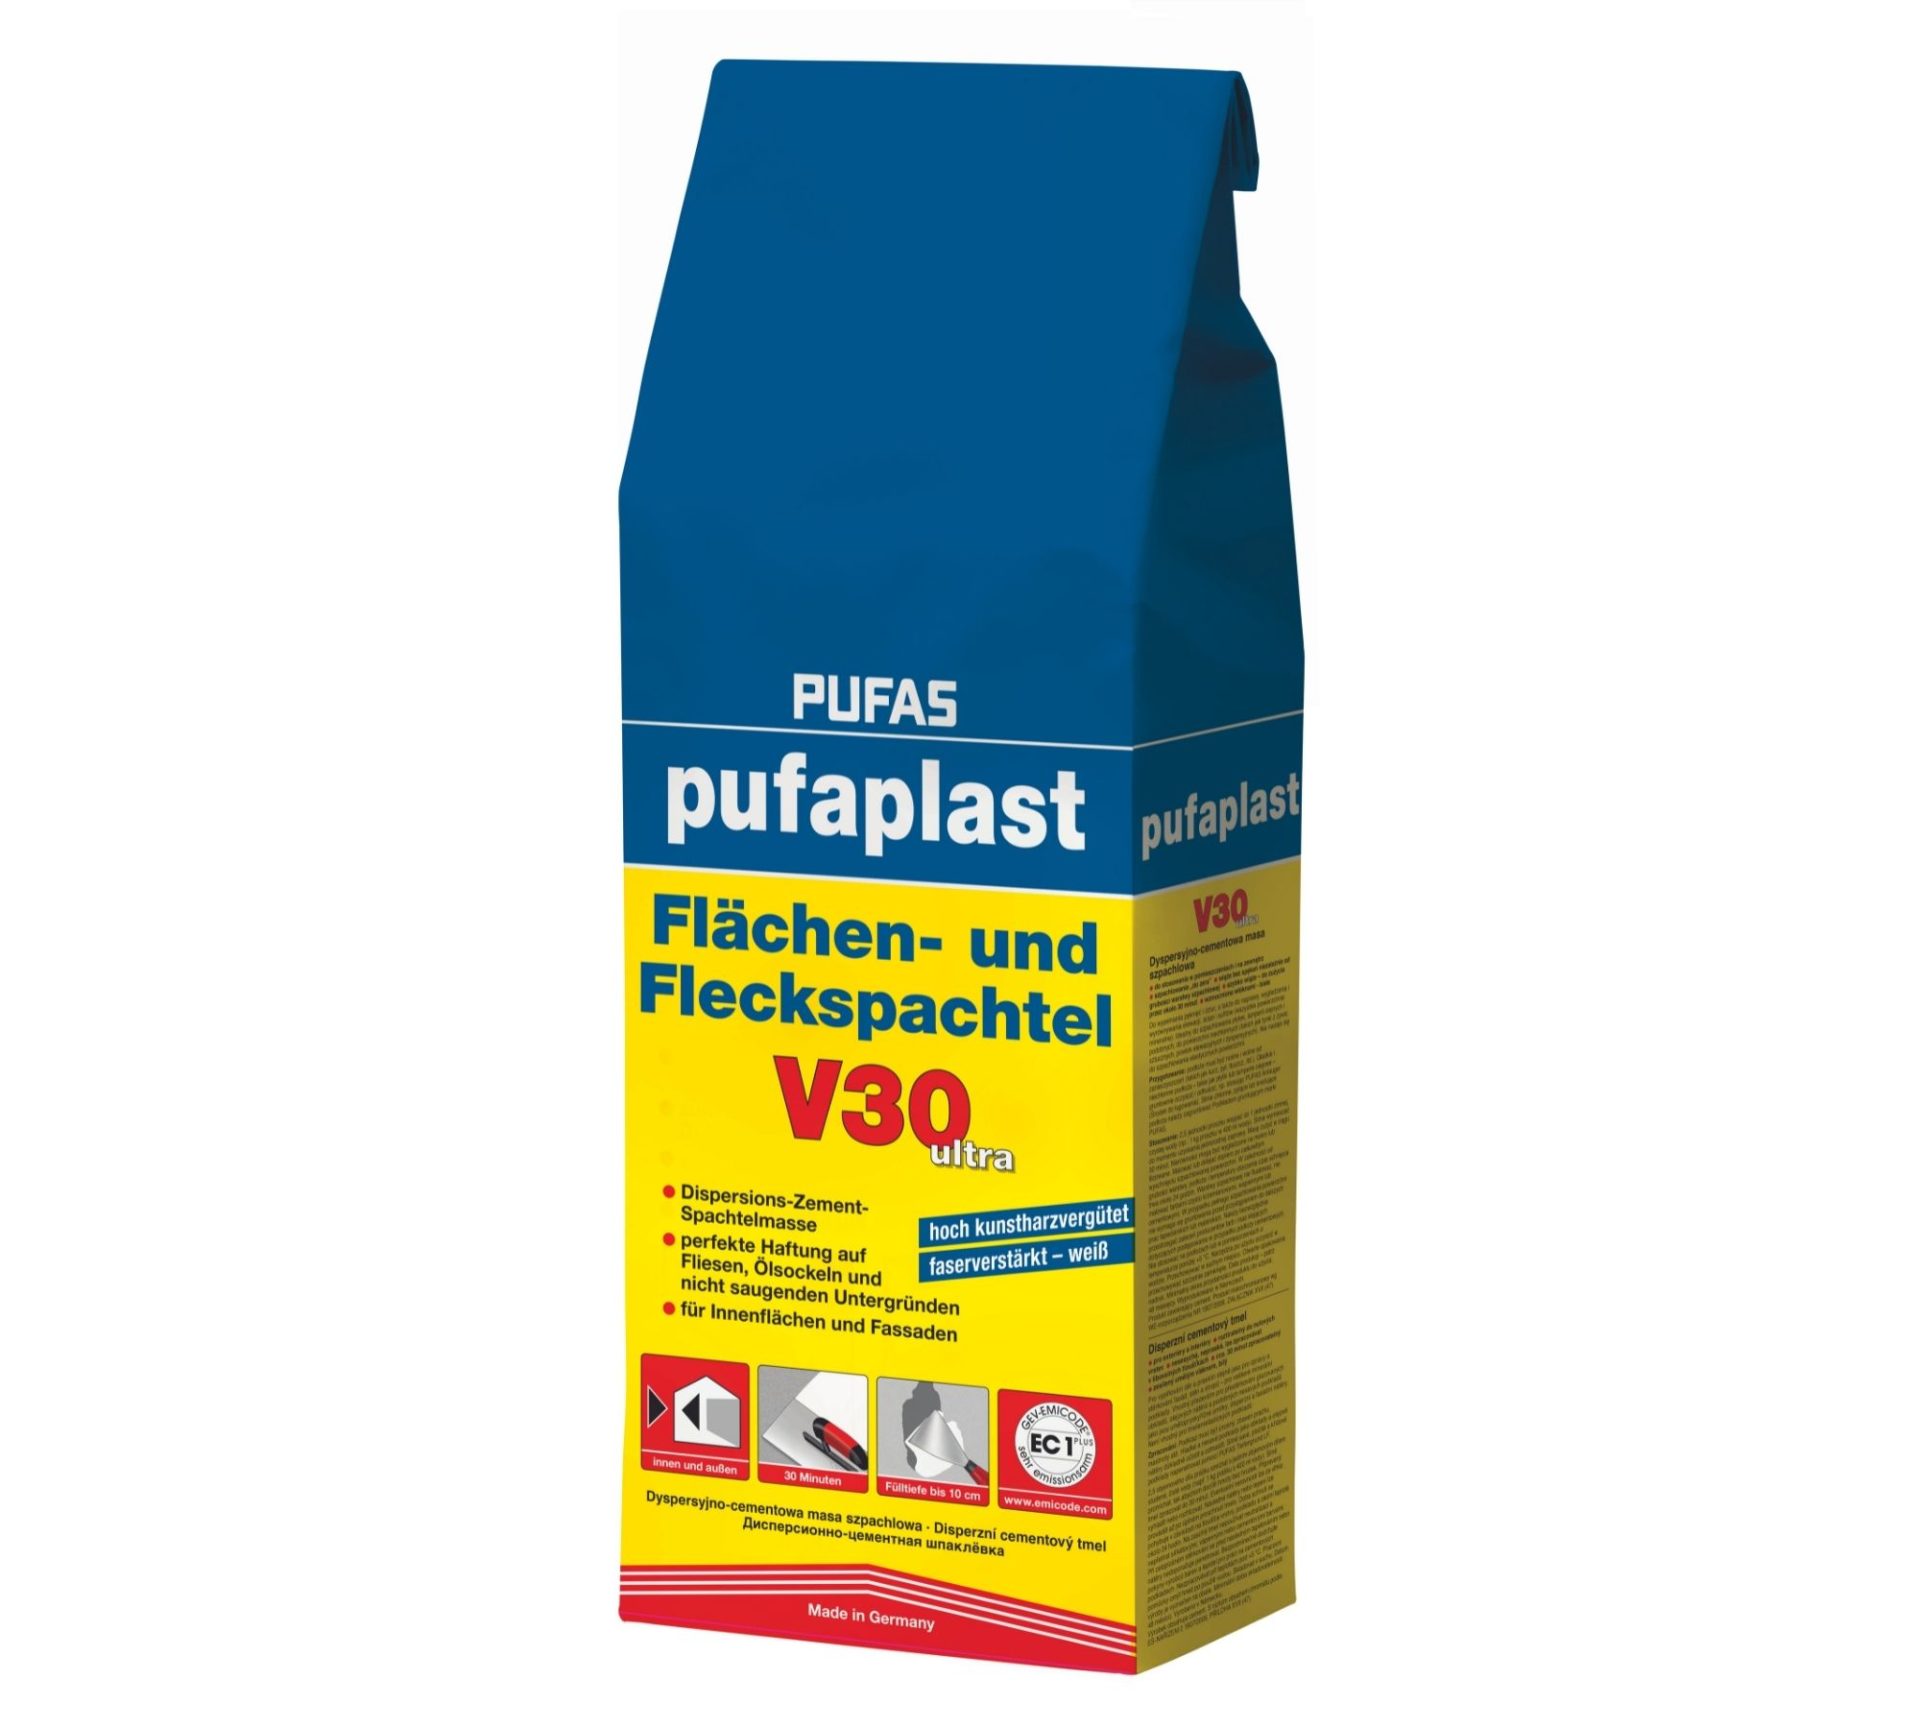 PUFAS pufaplast Flächen- und Fleckspachtel V30 ultra - Reugels +